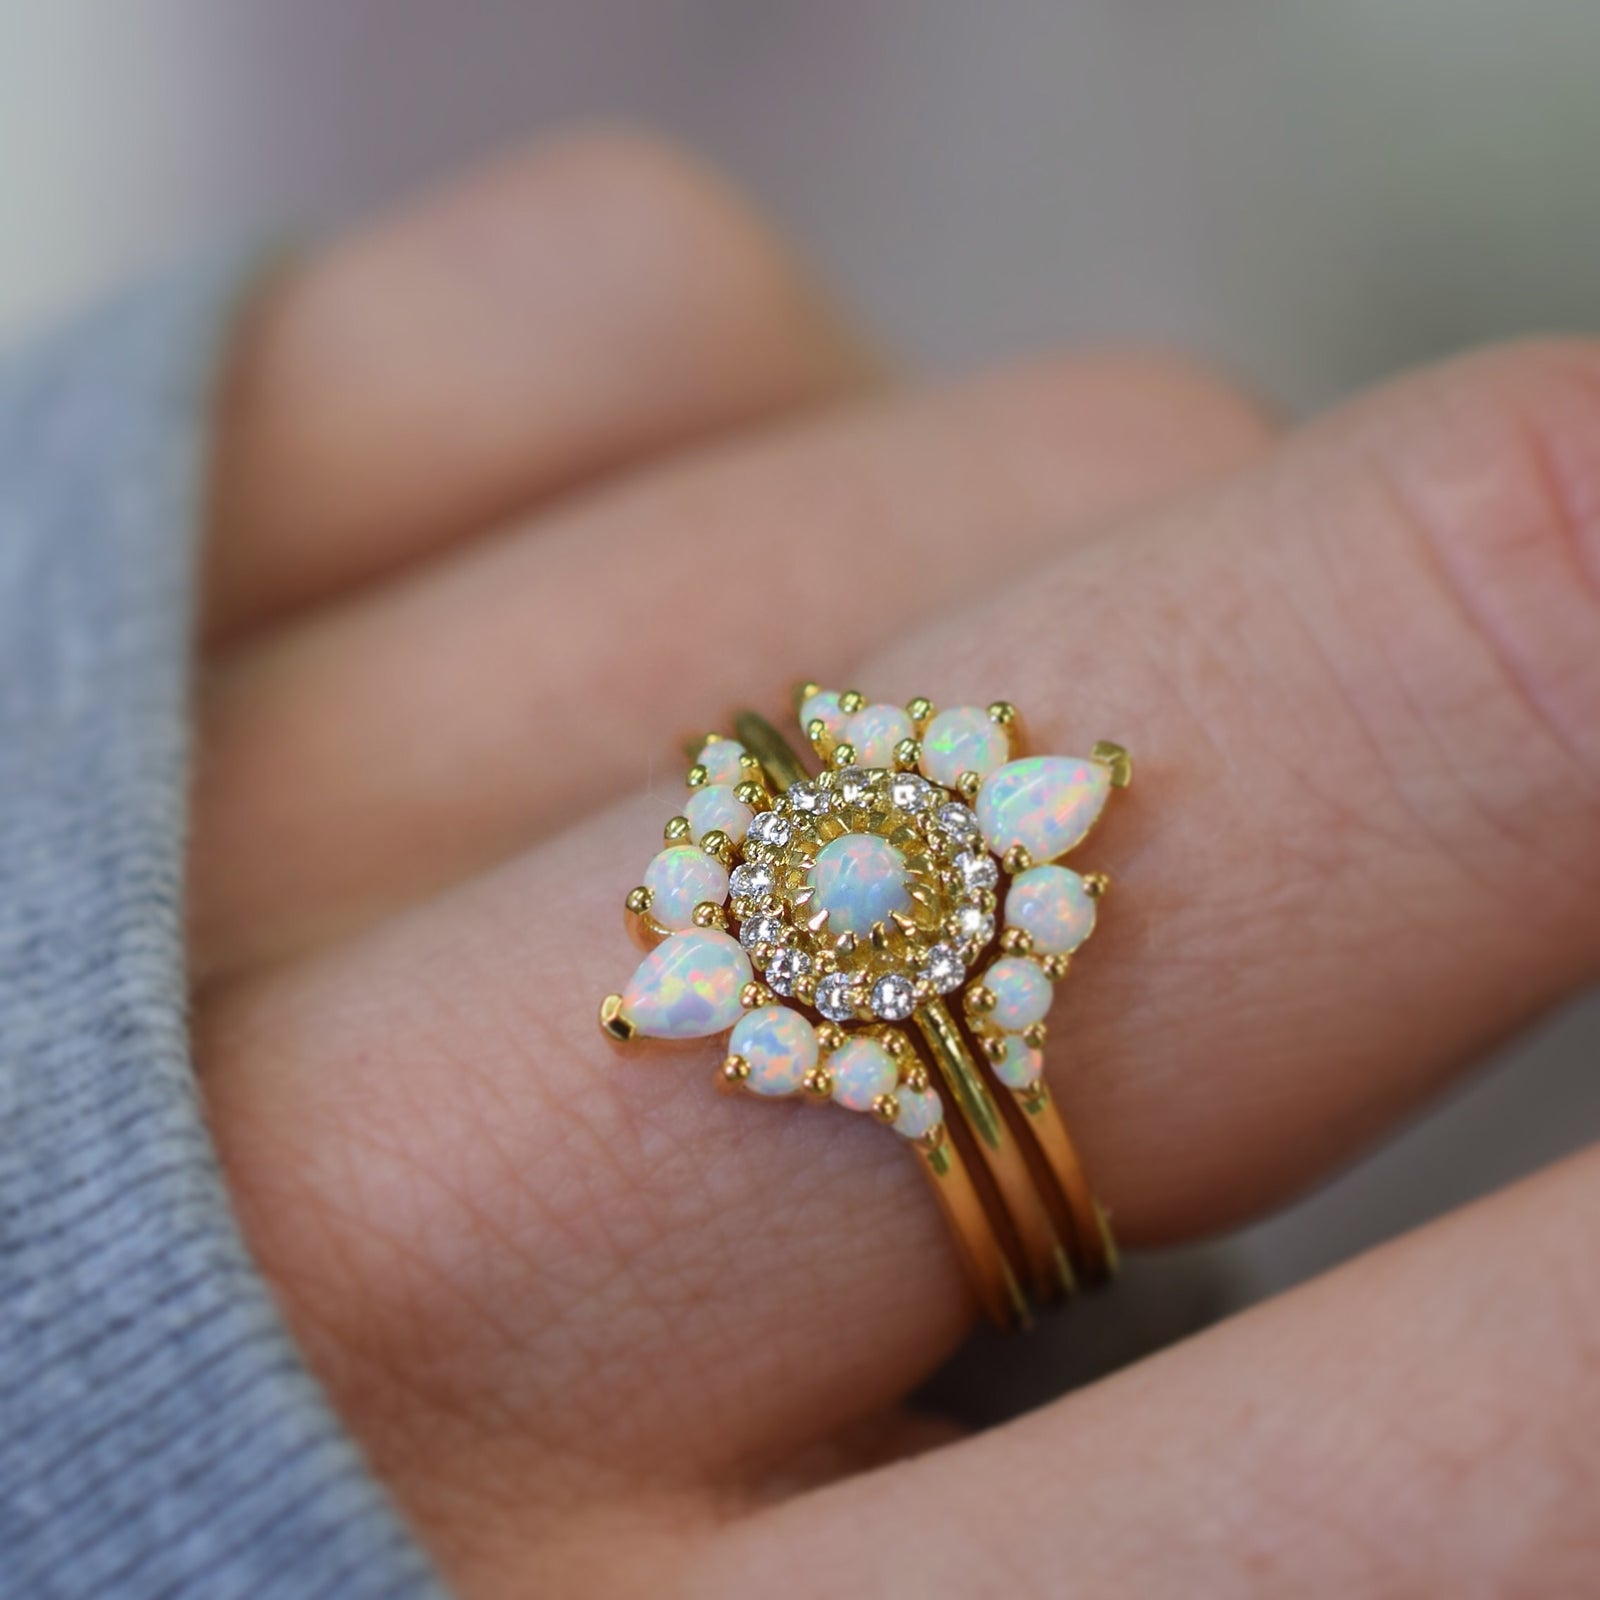 Opal, Diamond & Moonstone Rings | Fine Jewelry Rings for Women - La Kaiser